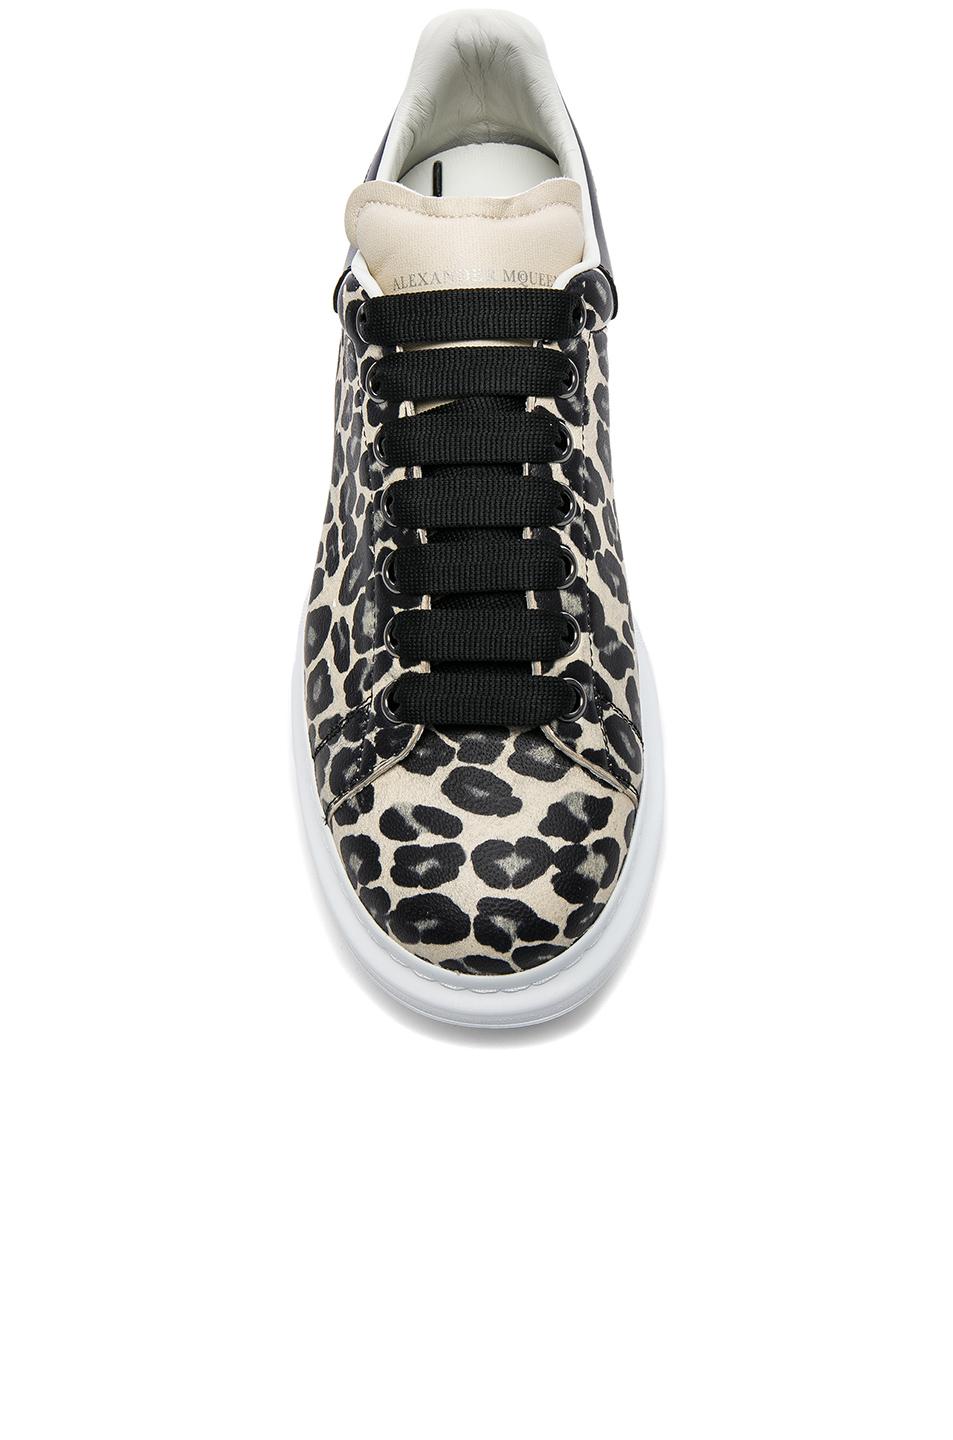 Alexander McQueen Oversized Leopard-Print Leather Sneakers in Black | Lyst  UK